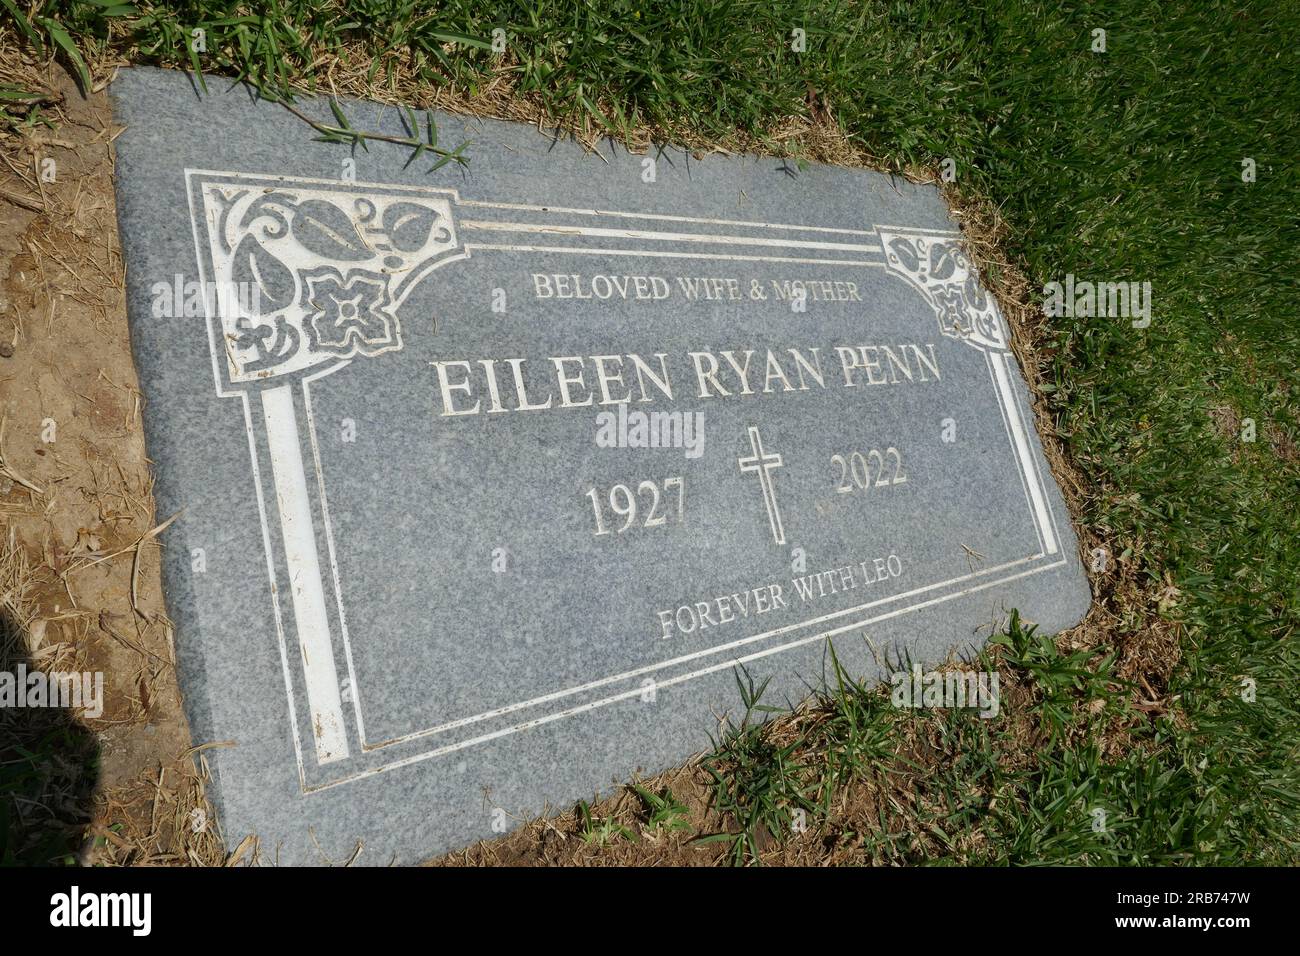 Culver City, Kalifornien, USA 6. Juli 2023 Schauspielerin Eileen Ryan, Eileen Ryan Penn Grave am Holy Cross Cemetery am 6. Juli 2023 in Culver City, Kalifornien, USA. Foto: Barry King/Alamy Stock Photo Stockfoto